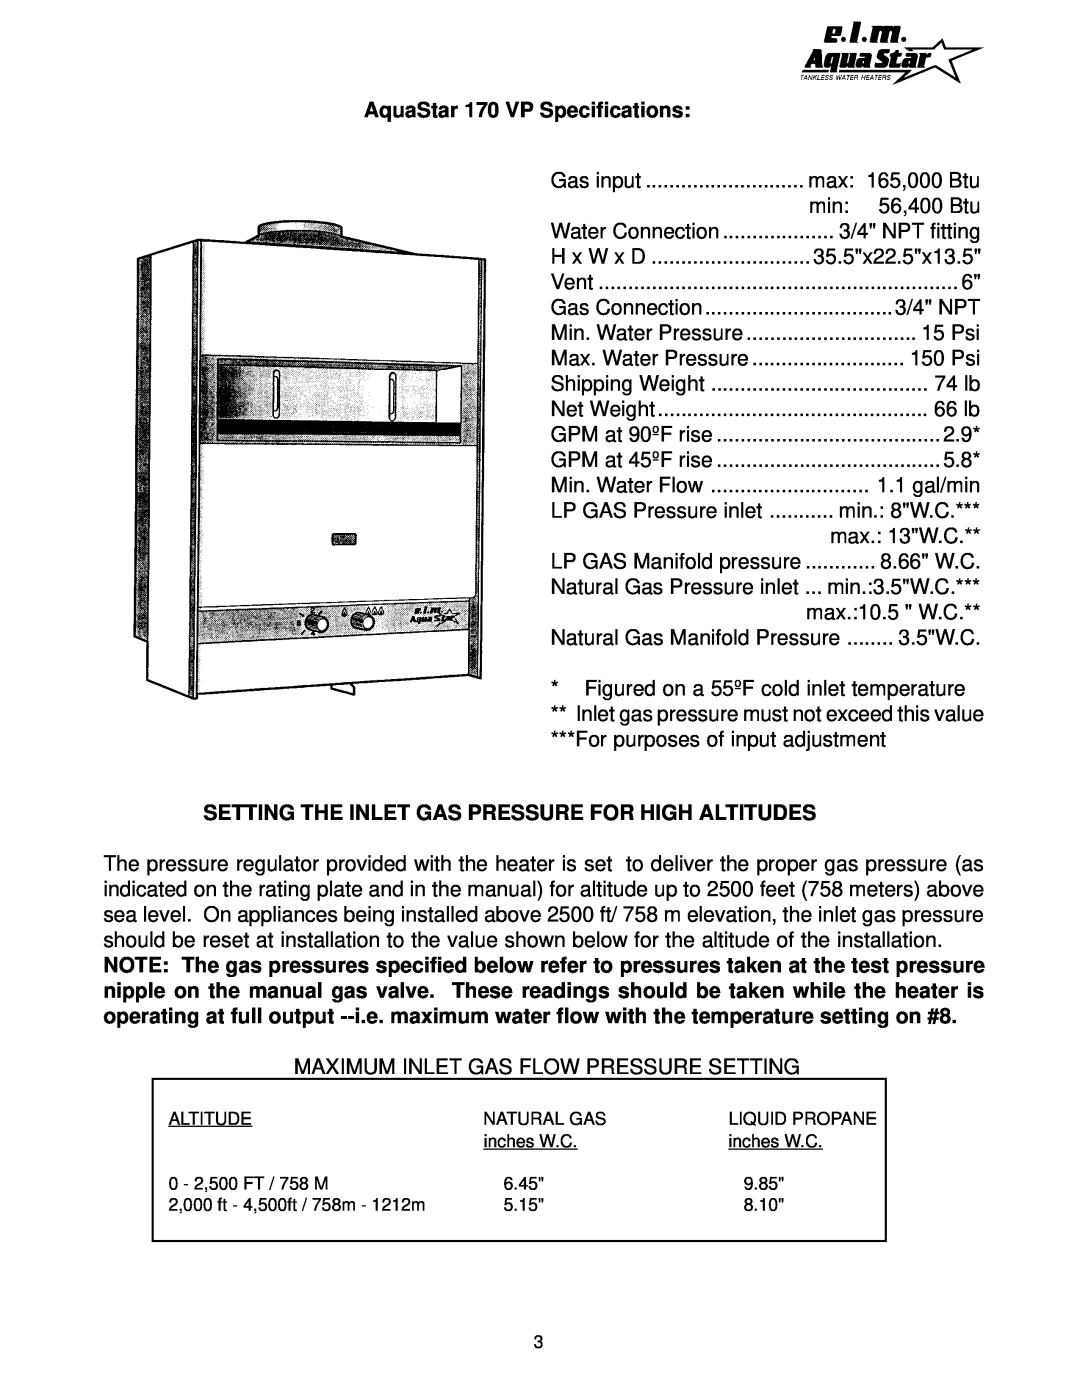 AquaStar manual AquaStar 170 VP Specifications, Setting The Inlet Gas Pressure For High Altitudes 